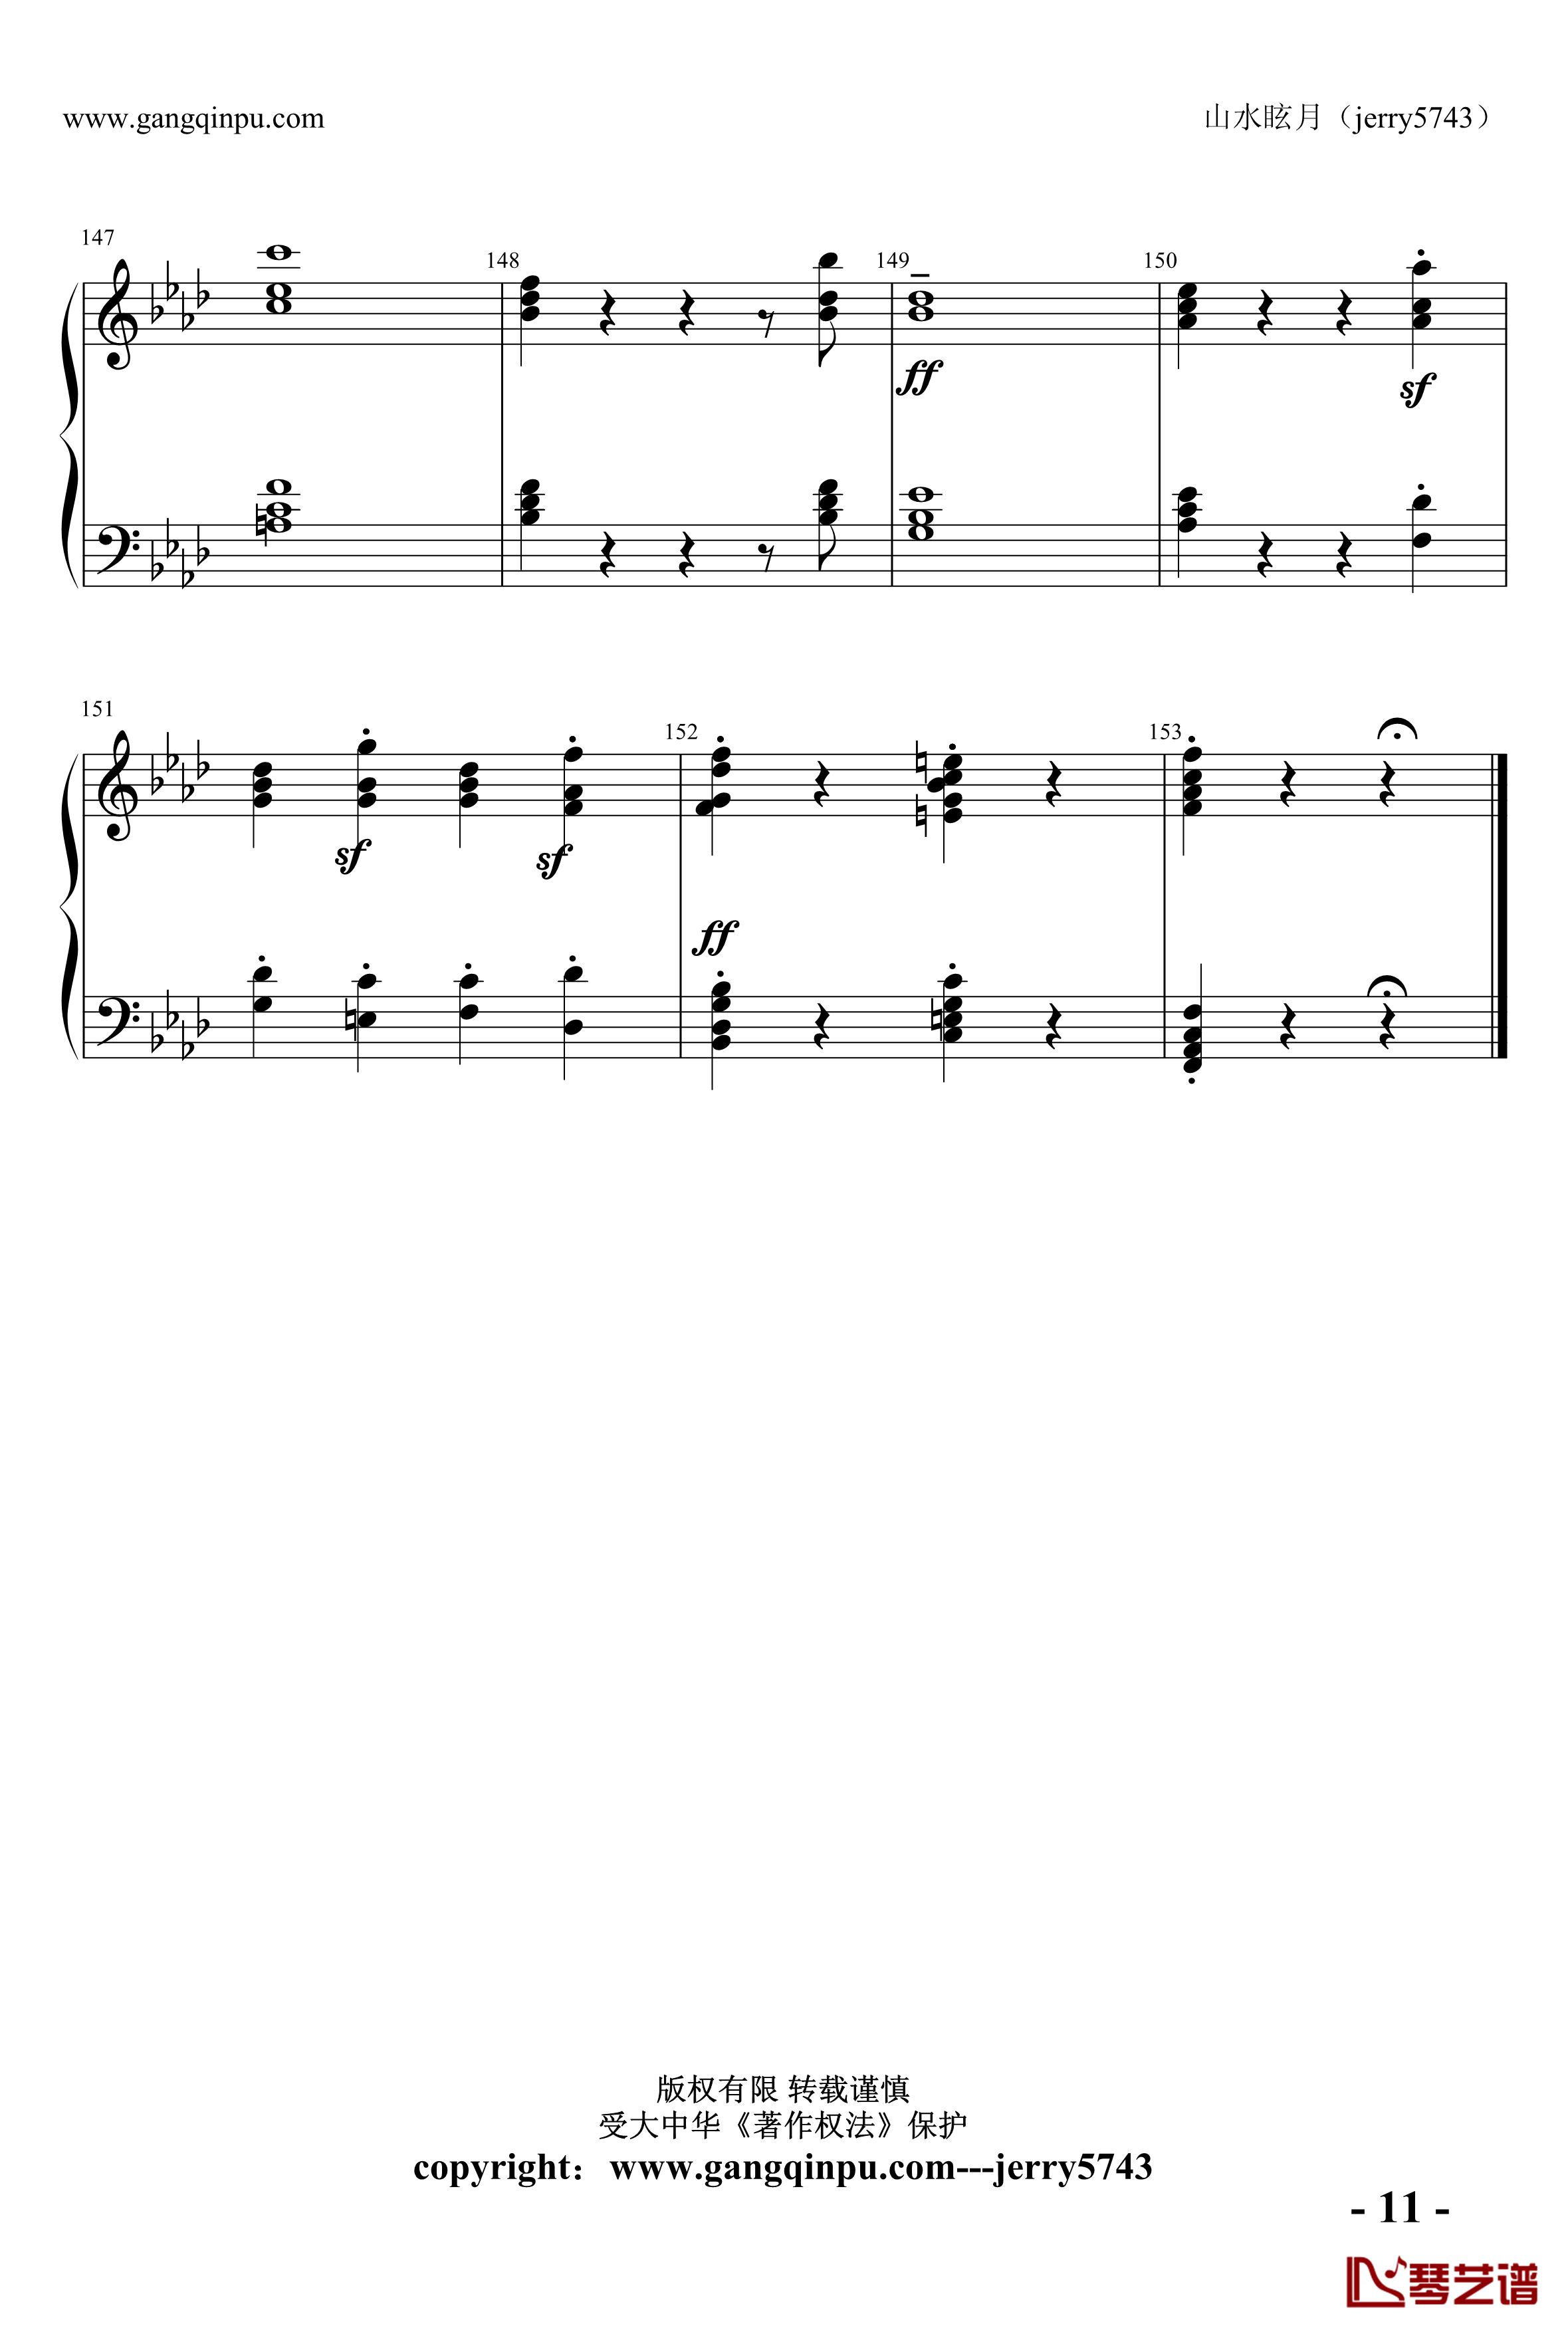 Piano Sonata No 1 part 1钢琴谱-贝多芬-beethoven11